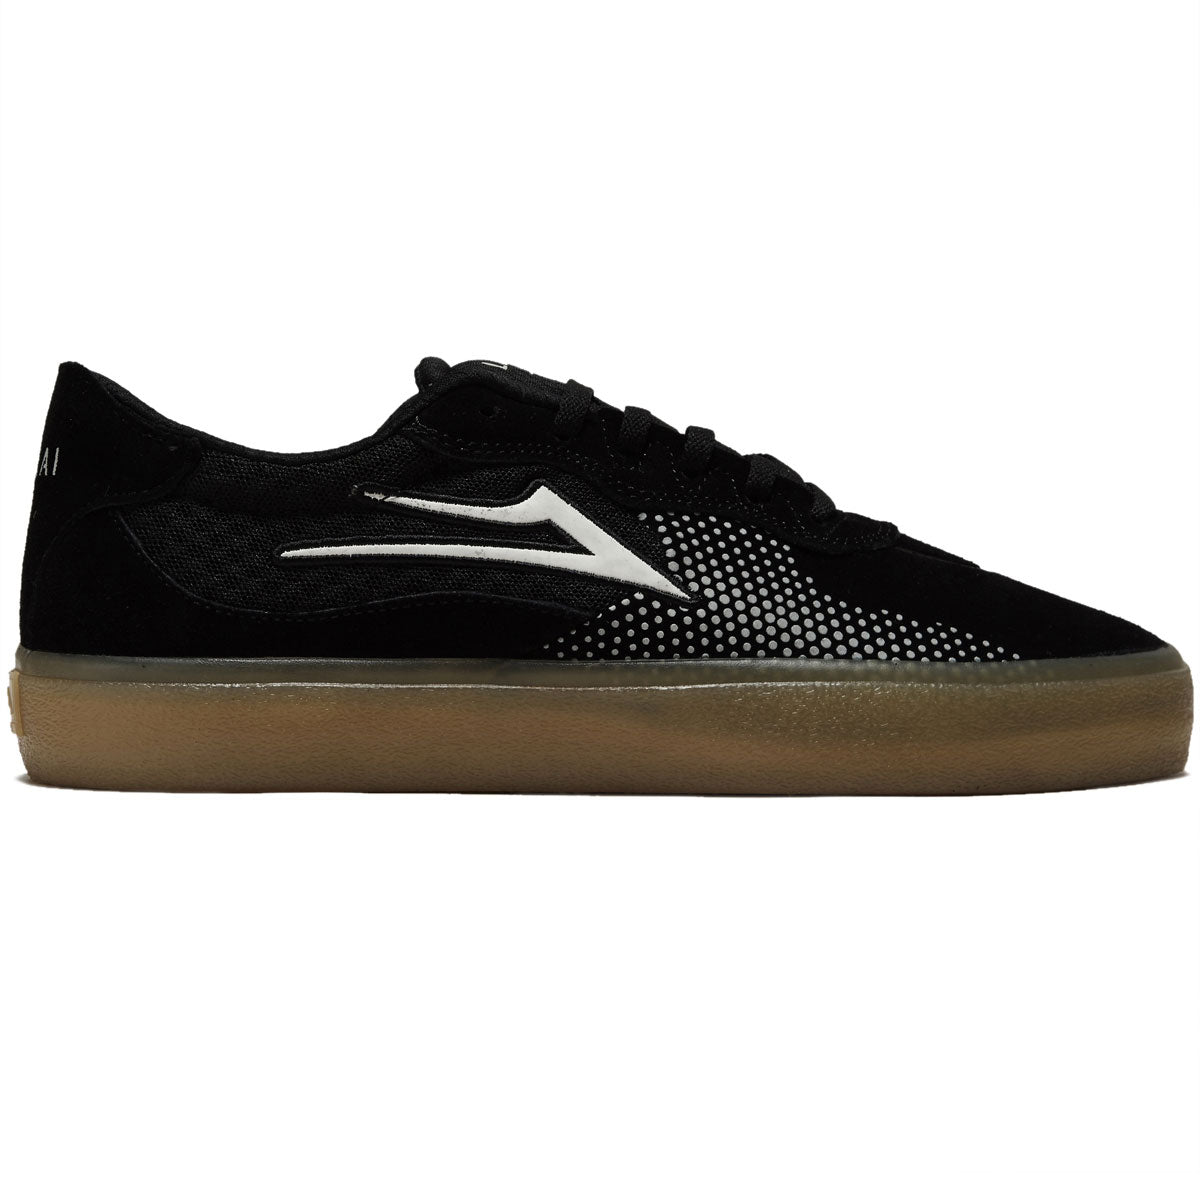 Lakai Essex Shoes - Black/Glow Suede image 1